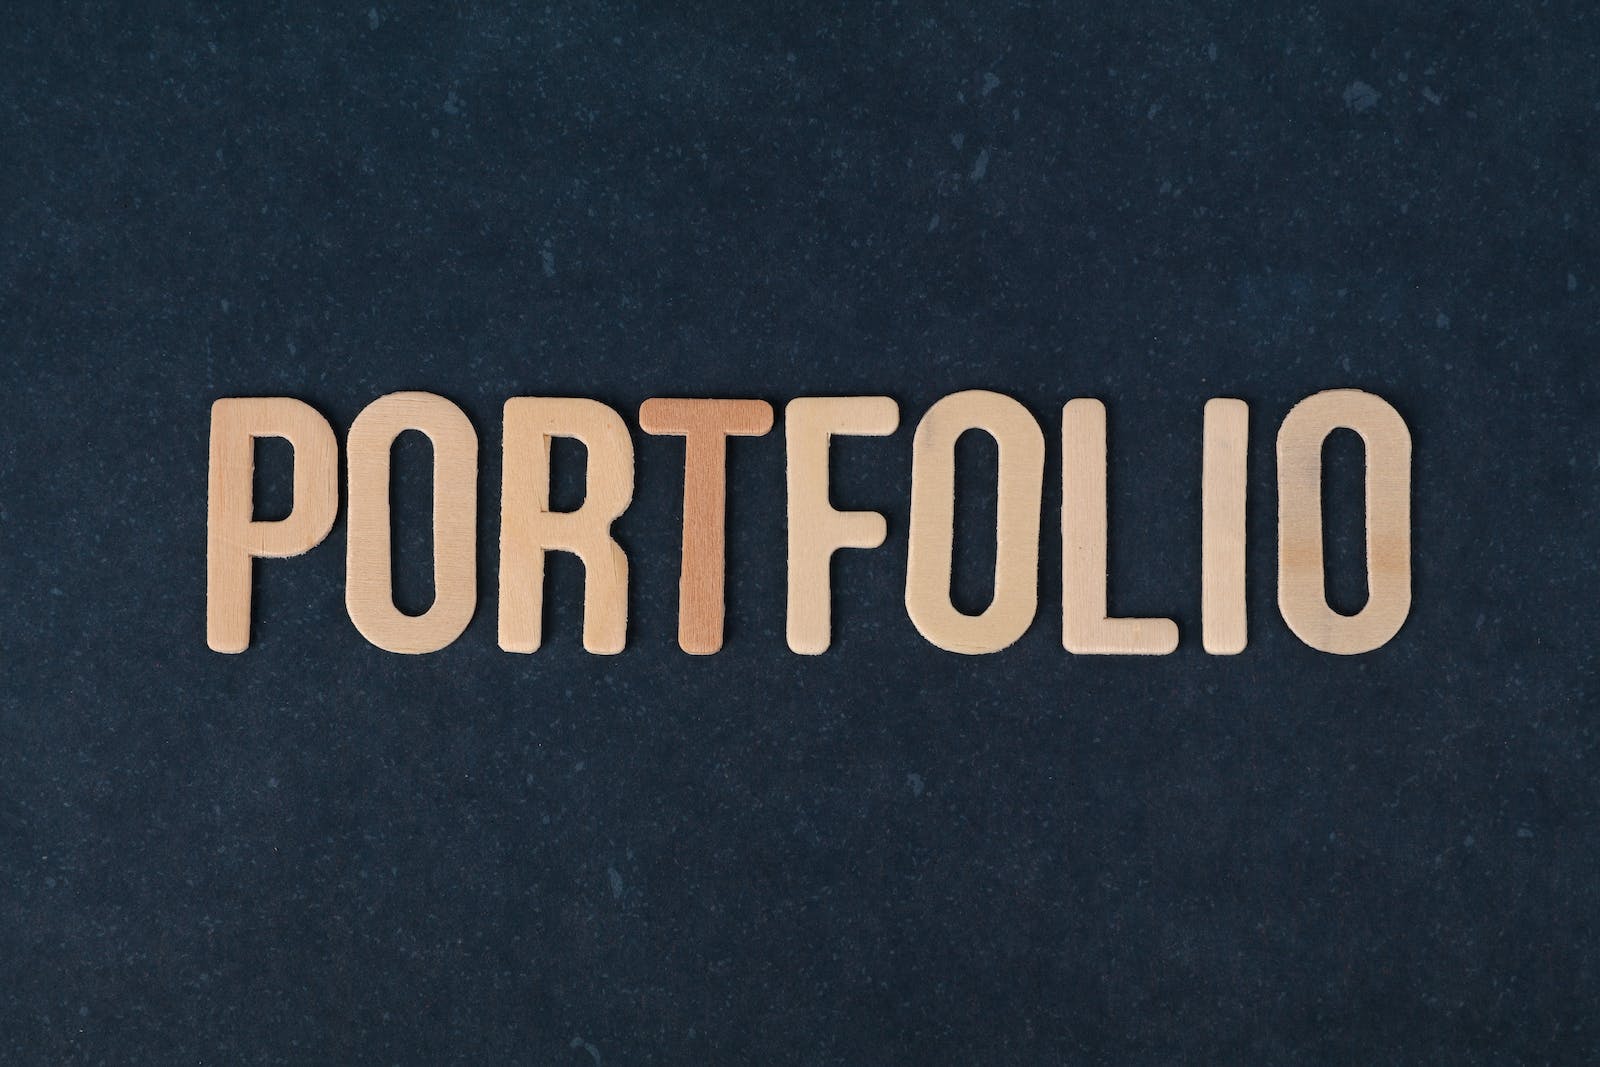 Freelance Portfolio - Word on Black Background